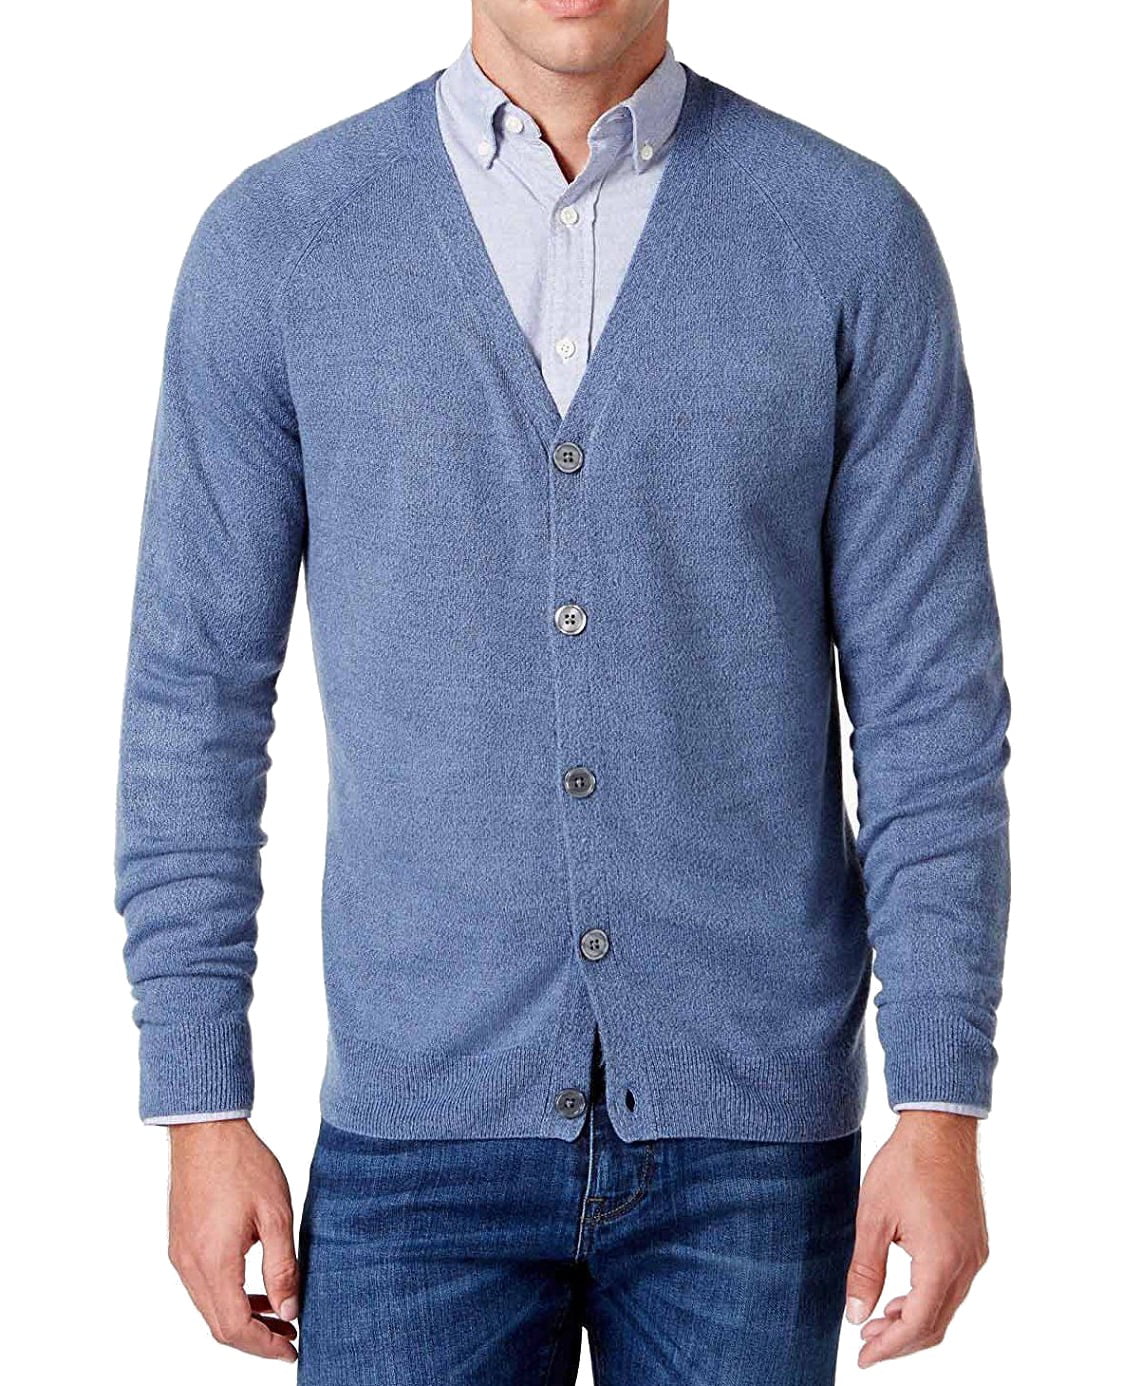 Weatherproof - NEW Denim Blue Mens Small S Button Down Cardigan Sweater